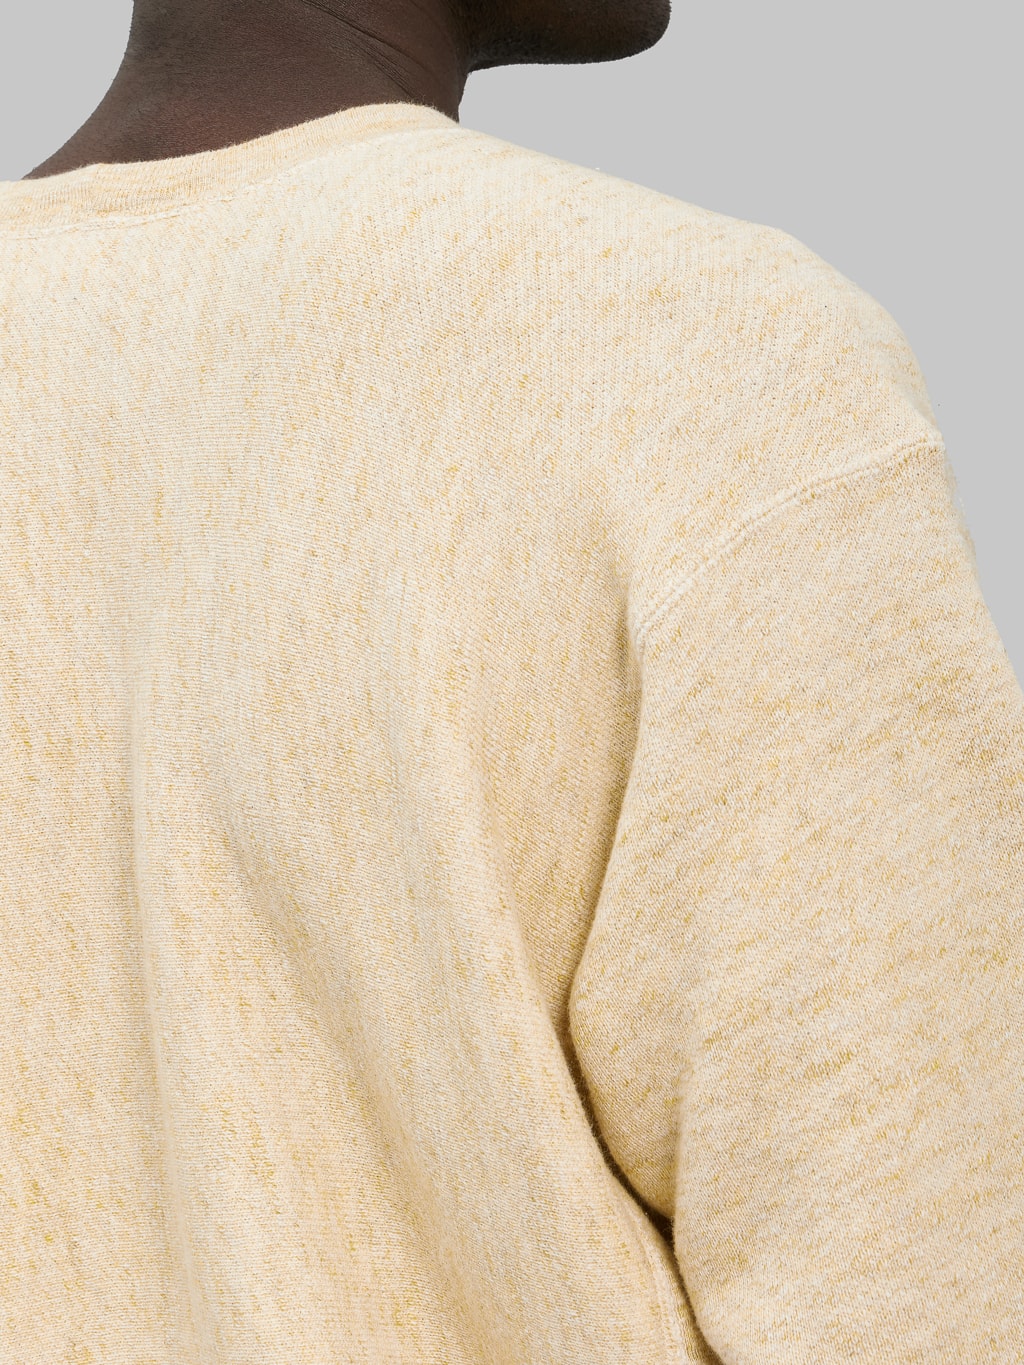 loop and weft big loopback fleece side panel sweatshirt mustard shoulder